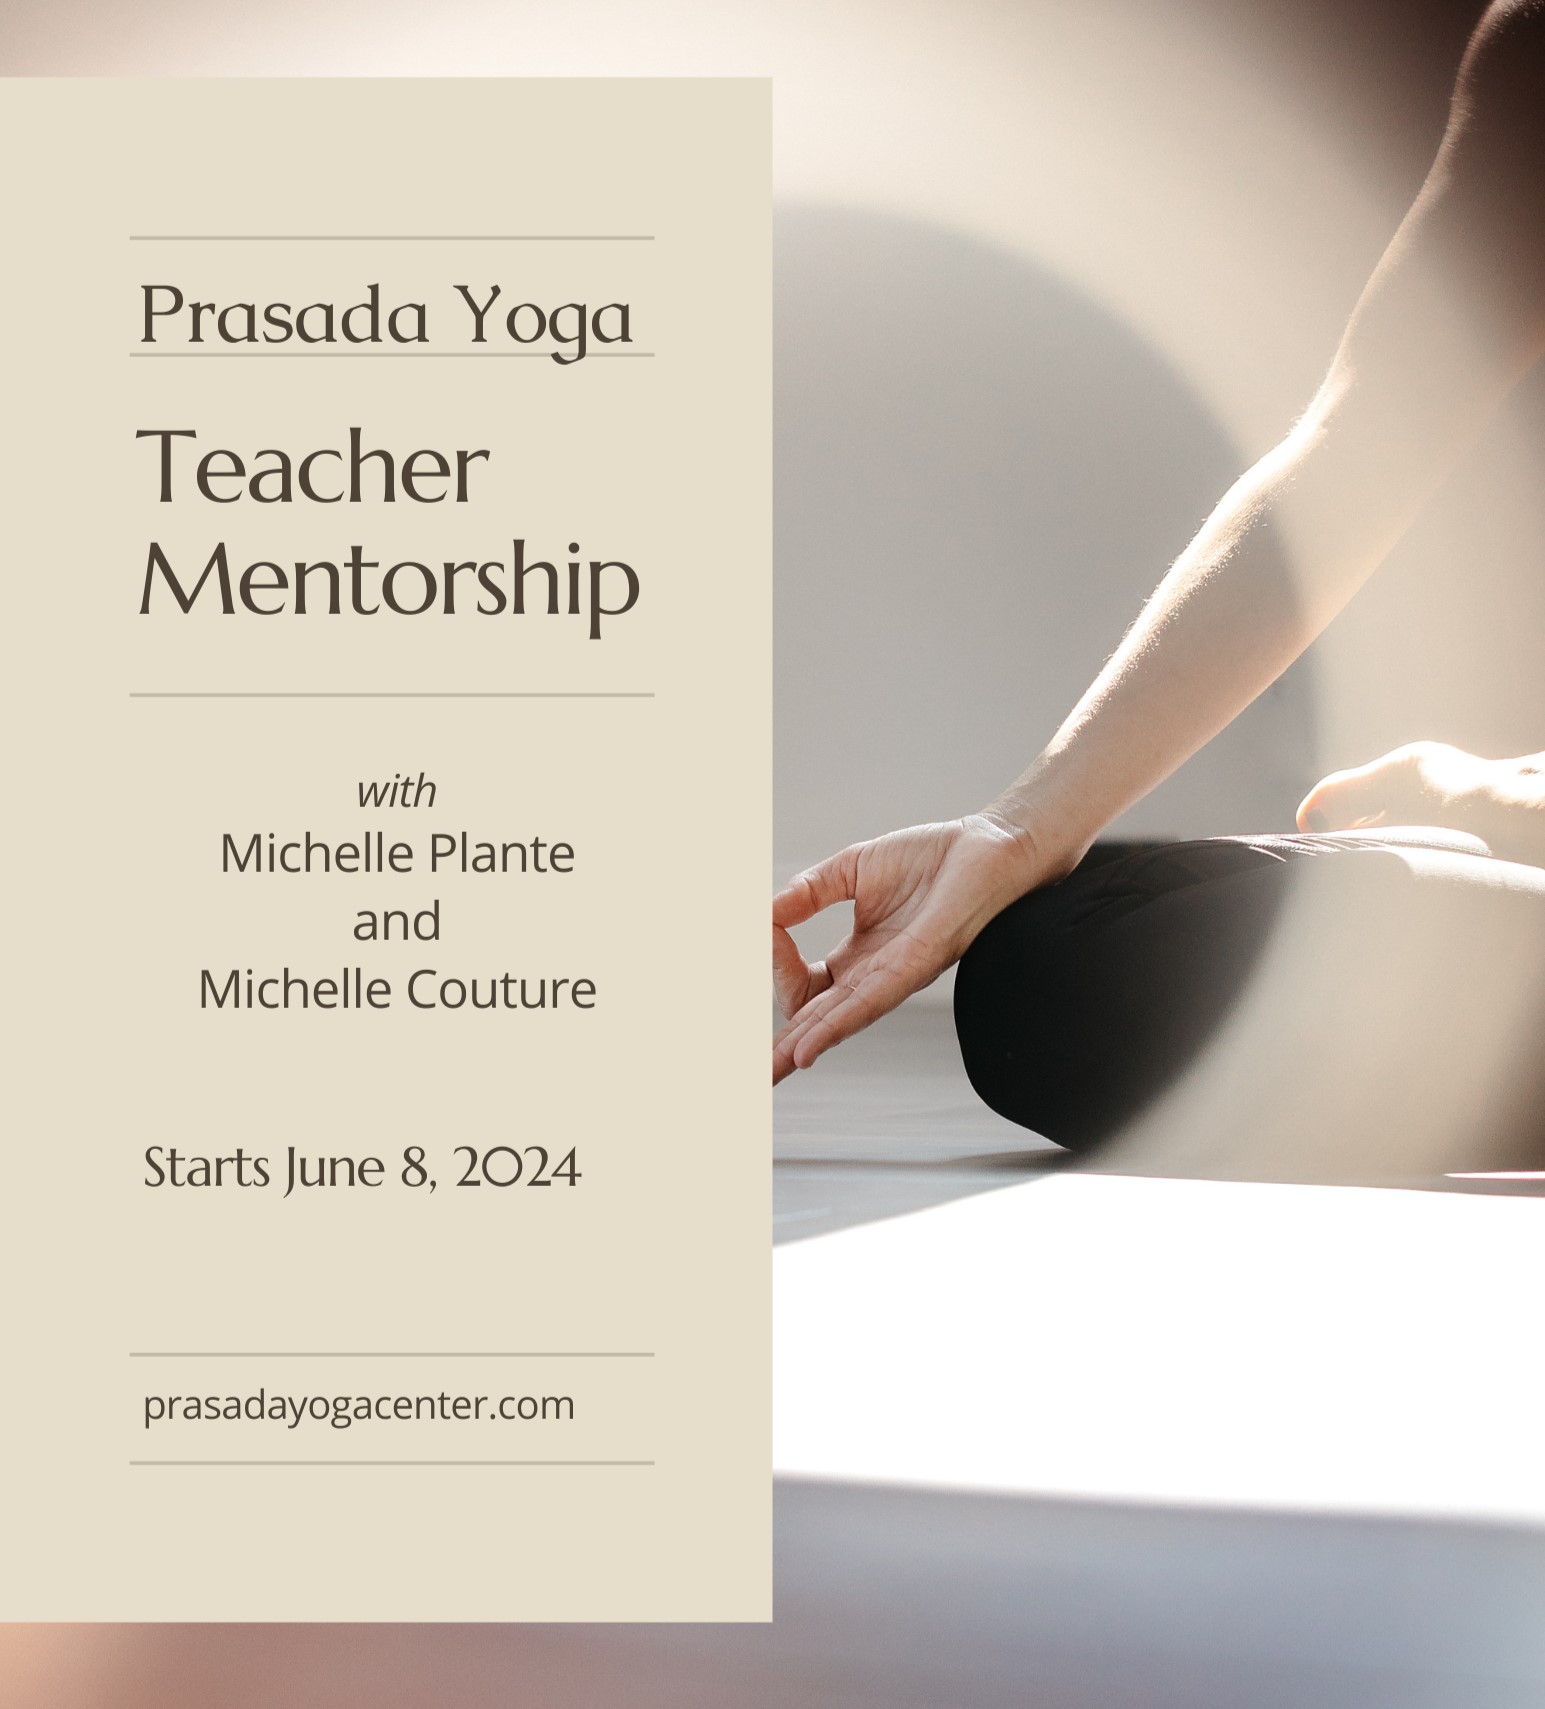 Yoga Teacher Training Manual